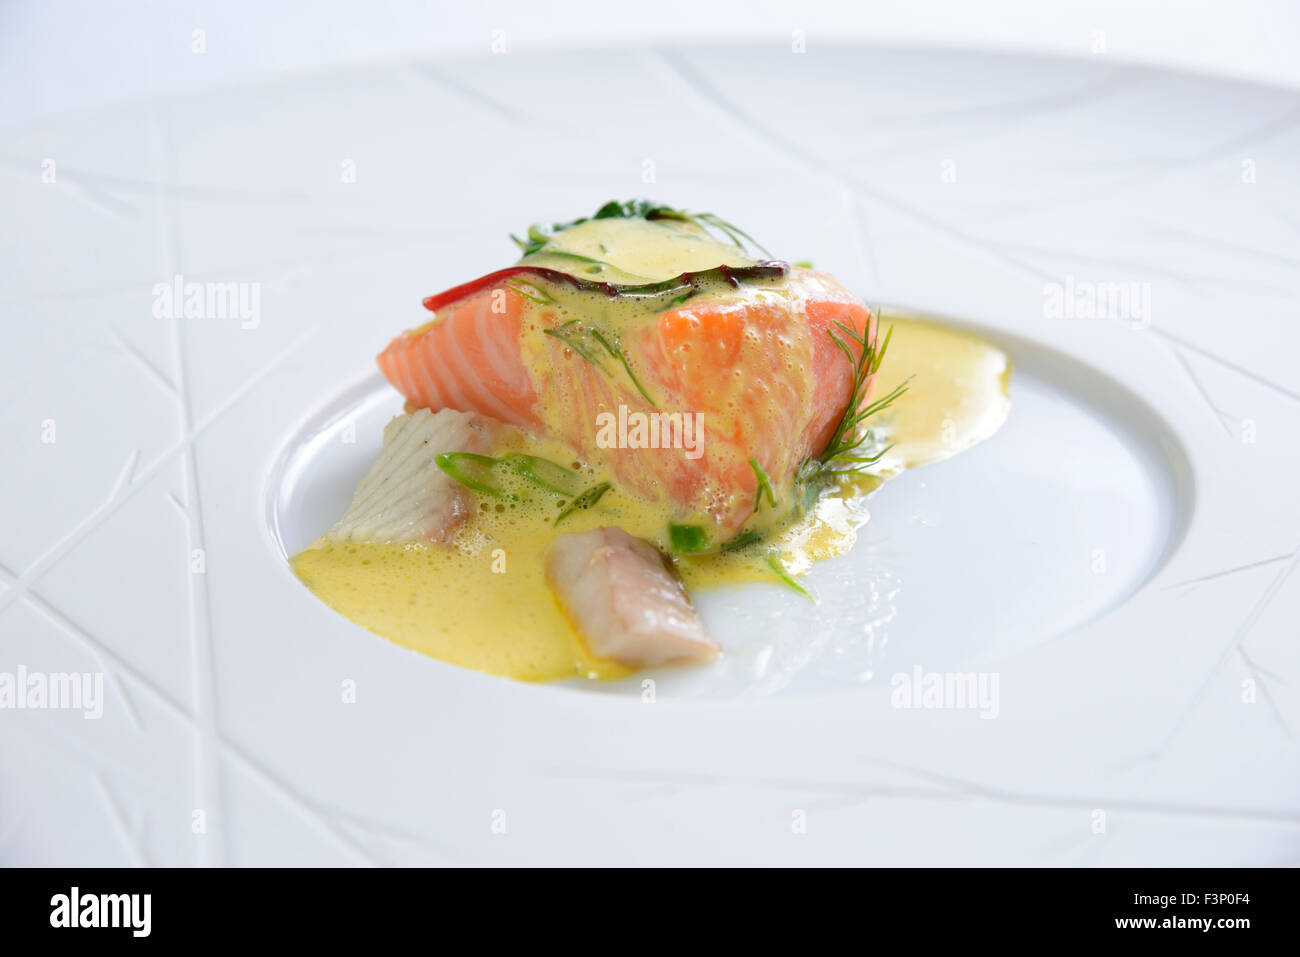 Nouvelle cuisine gourmet salmon fish dish Stock Photo